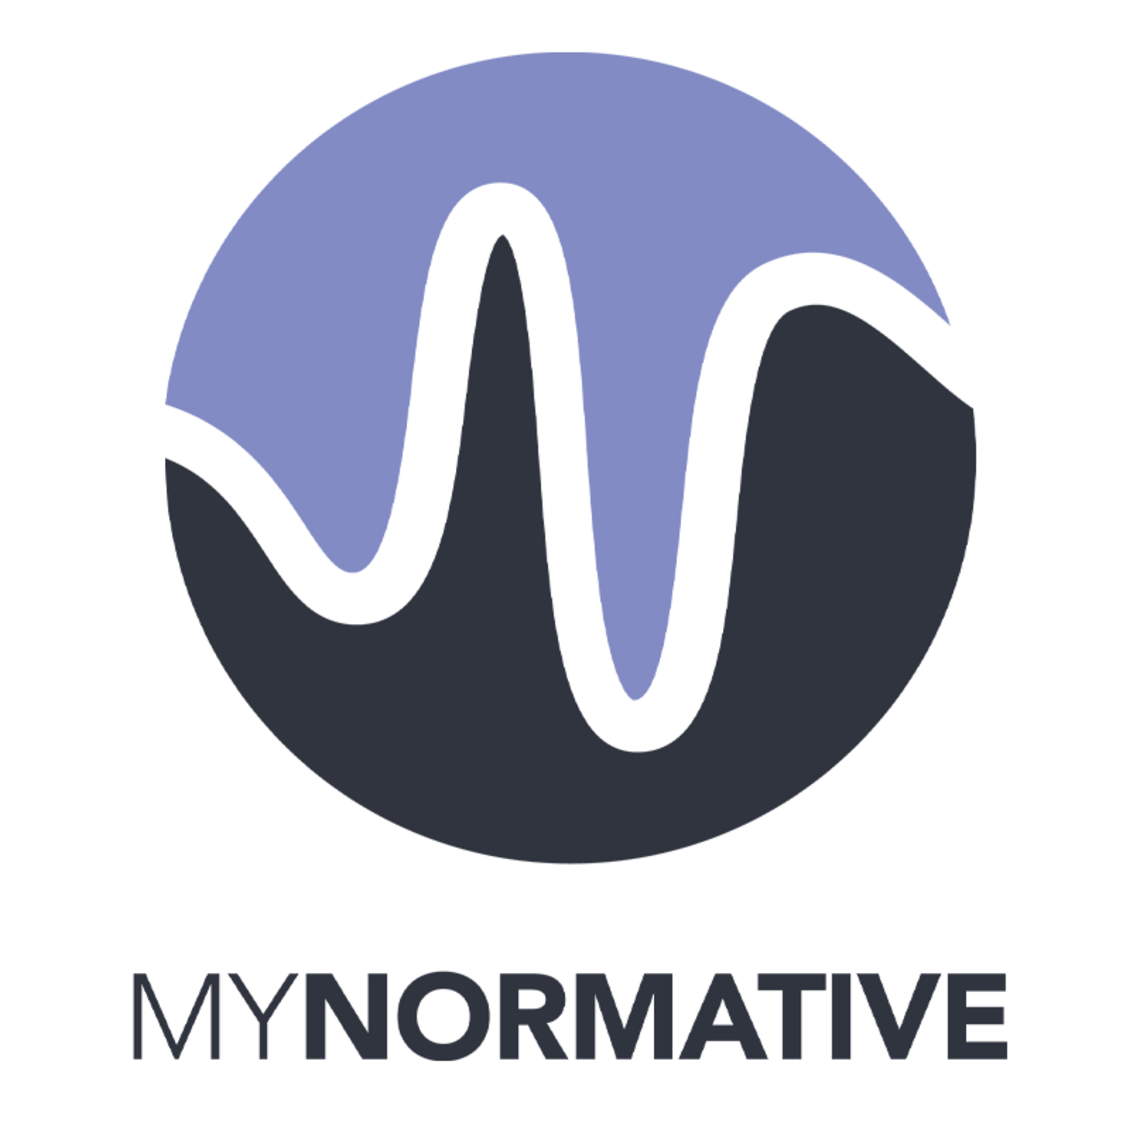 My normative logo